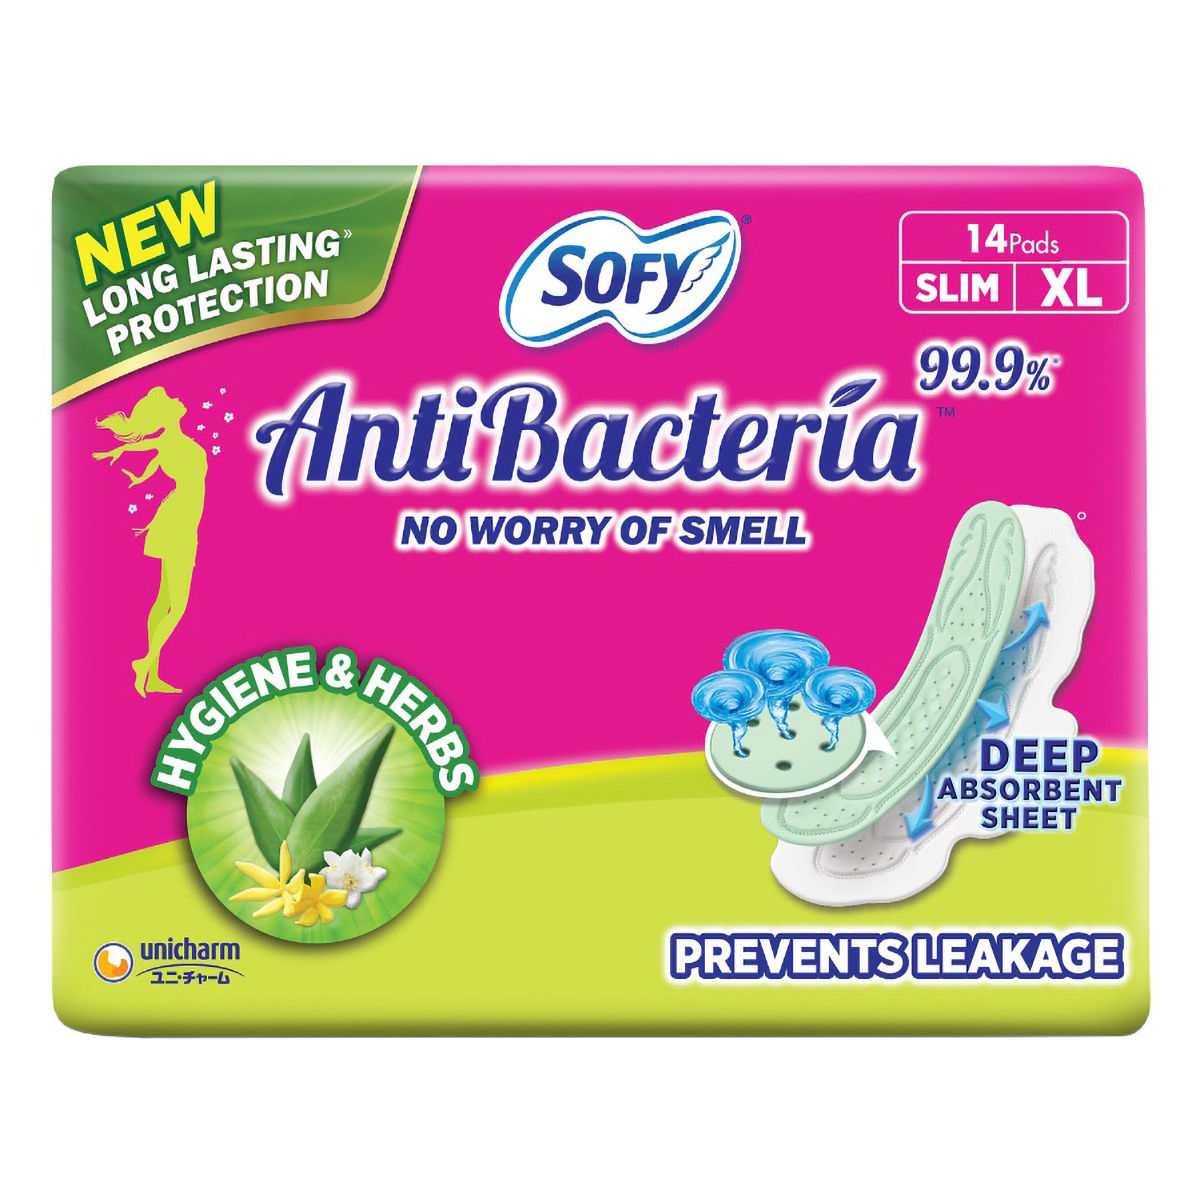 Sofy Antibacteria Sanitary Pads XL, 14 Count, Pack of 1 